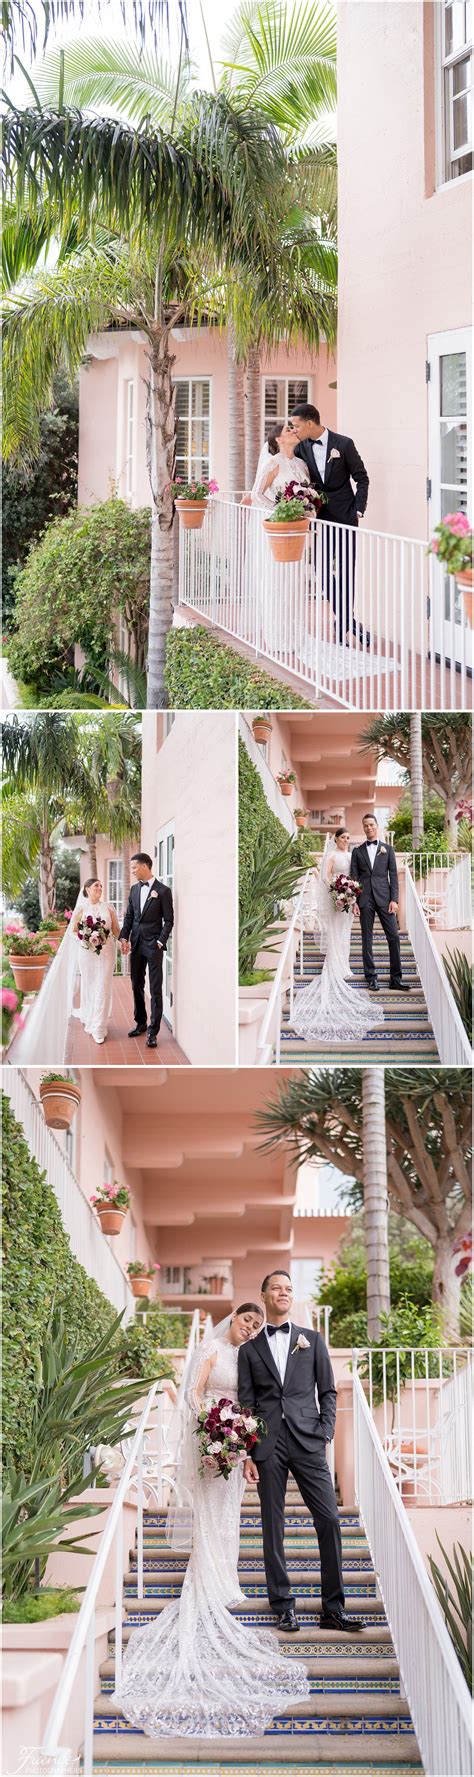 La Valencia Hotel Wedding Janette And Steven France Photographers